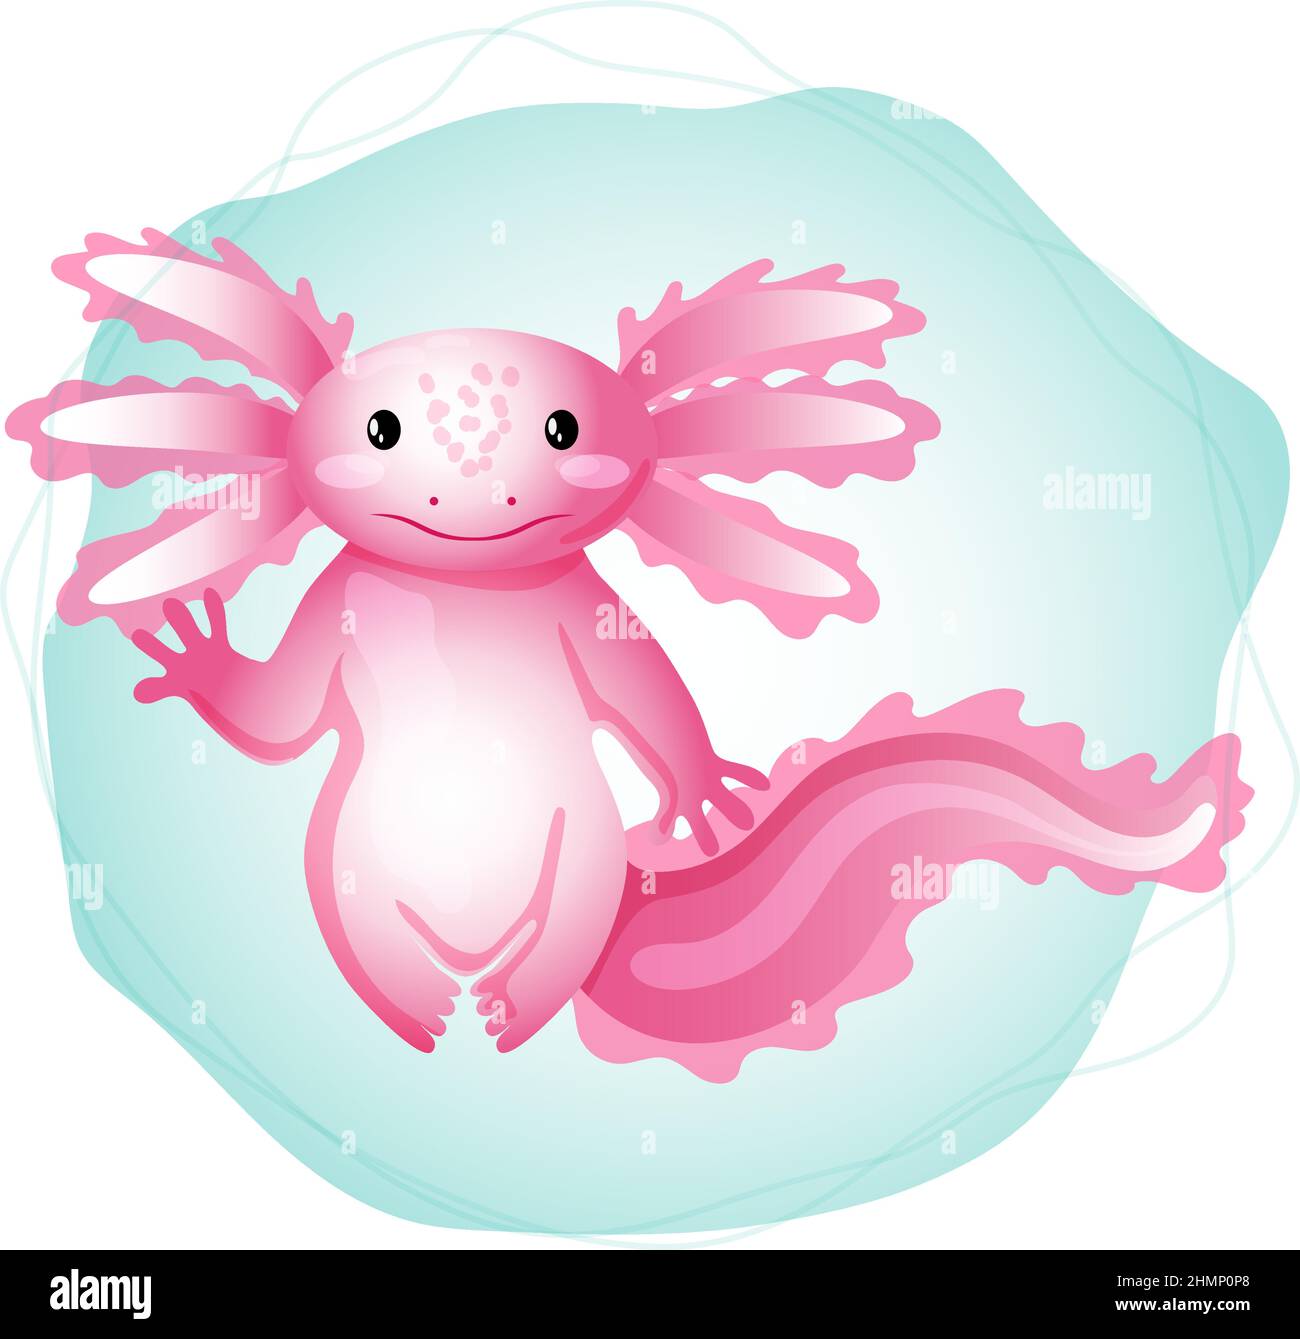 Cute axolotl, Ambystoma mexicanum, cartoon style vector illustration. Pink friendly axolotl. Stock Vector